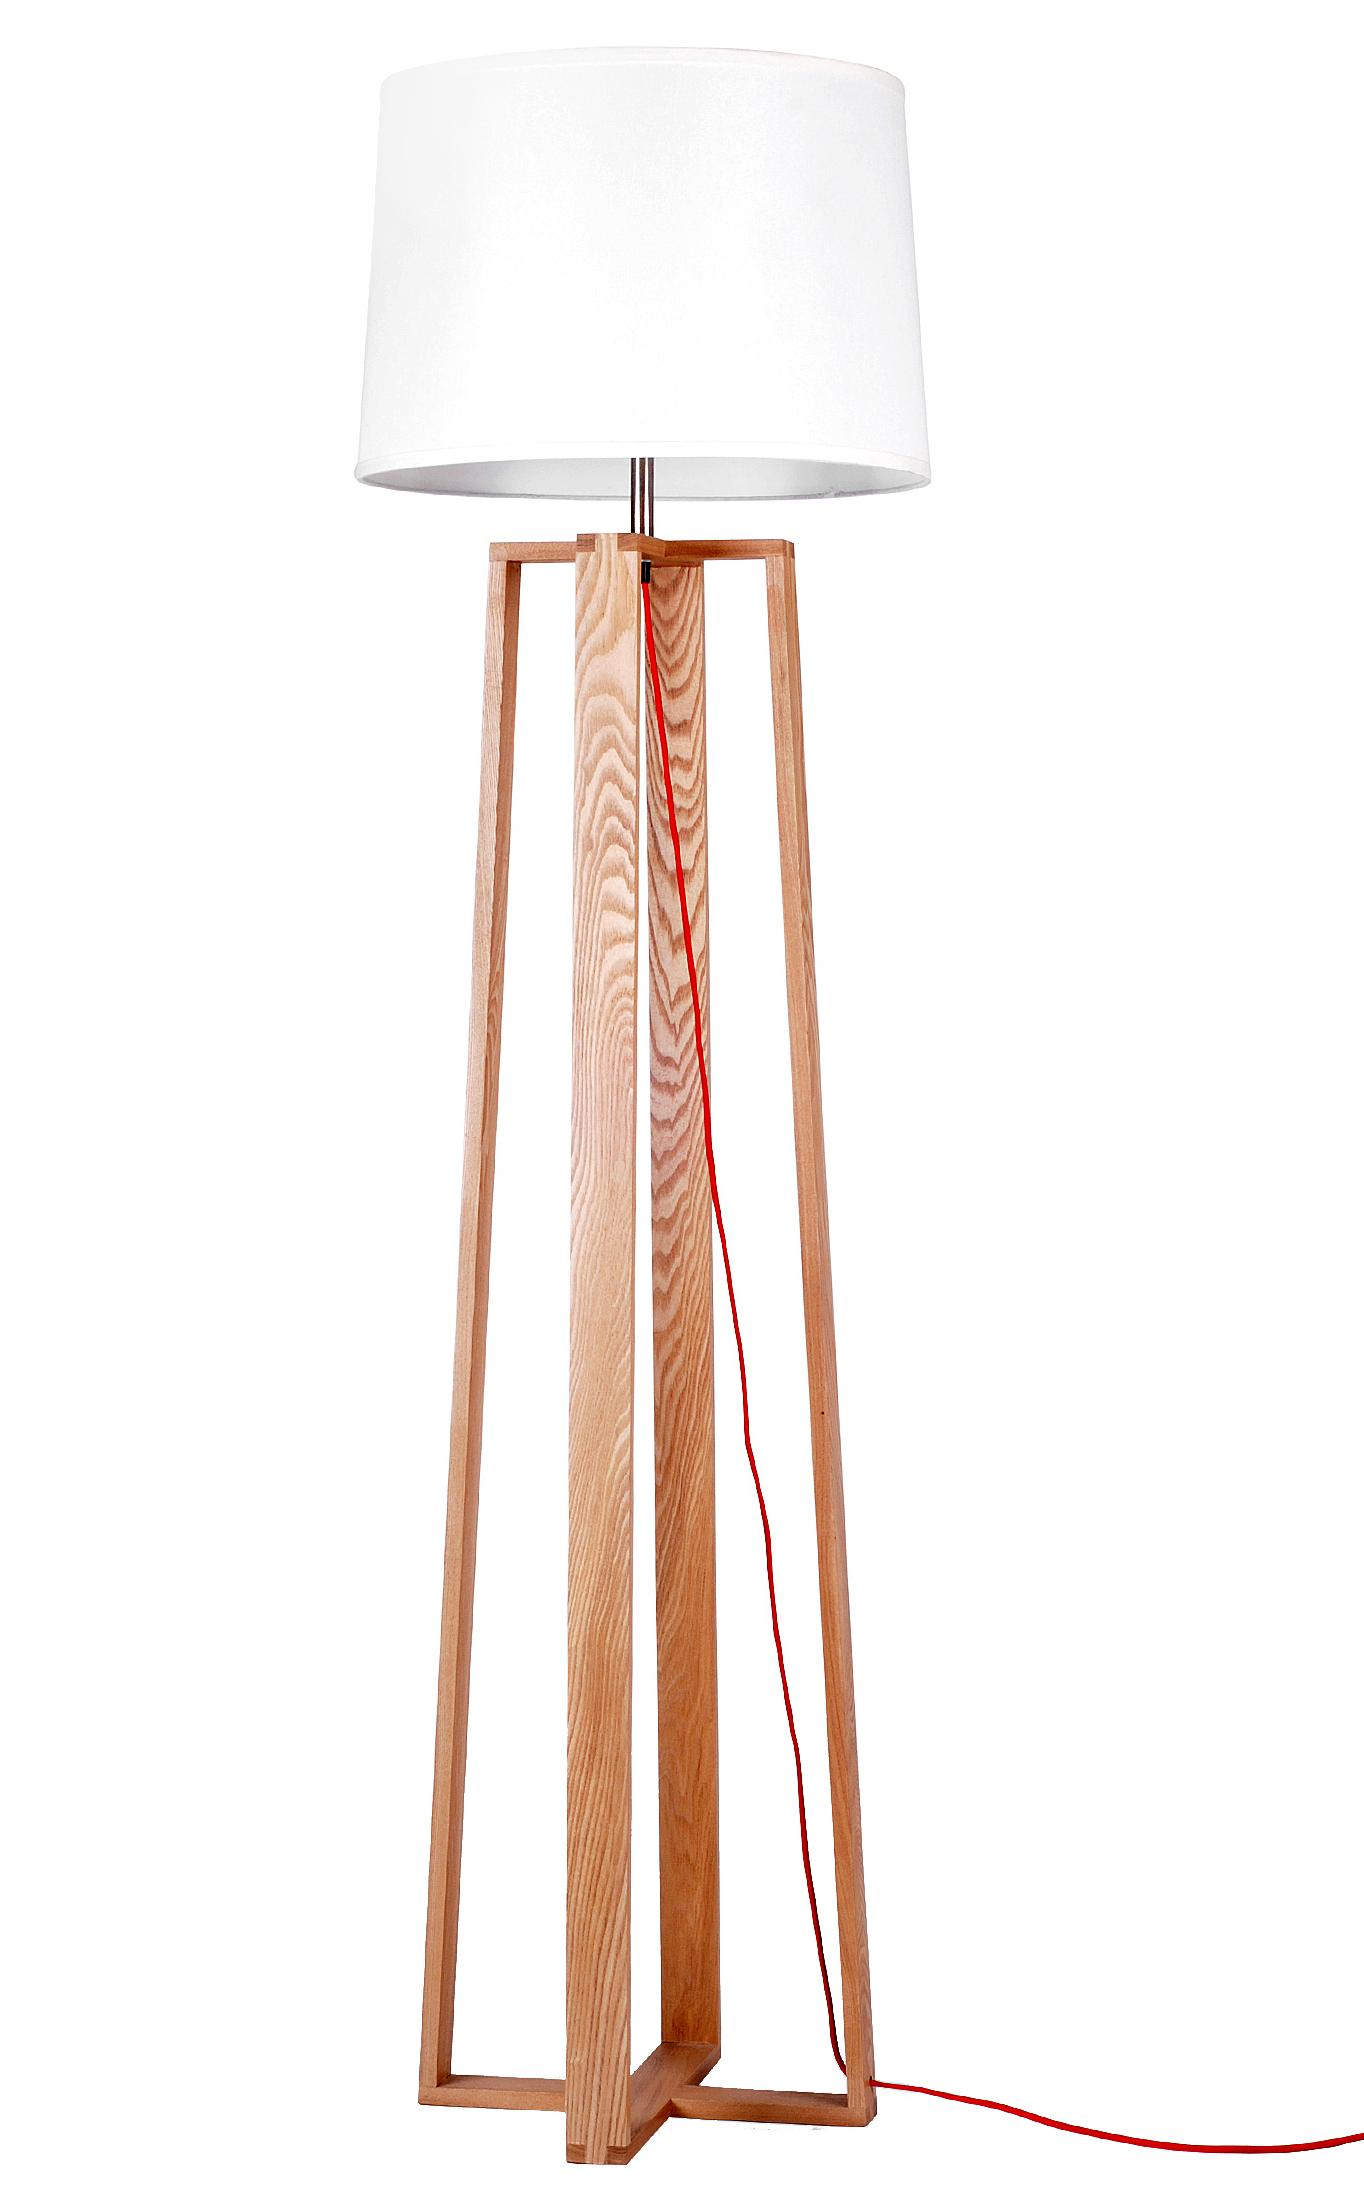 Stylish Good Quality Wooden Floor Lamp Mdq Lighting Coltd pertaining to size 1364 X 2200